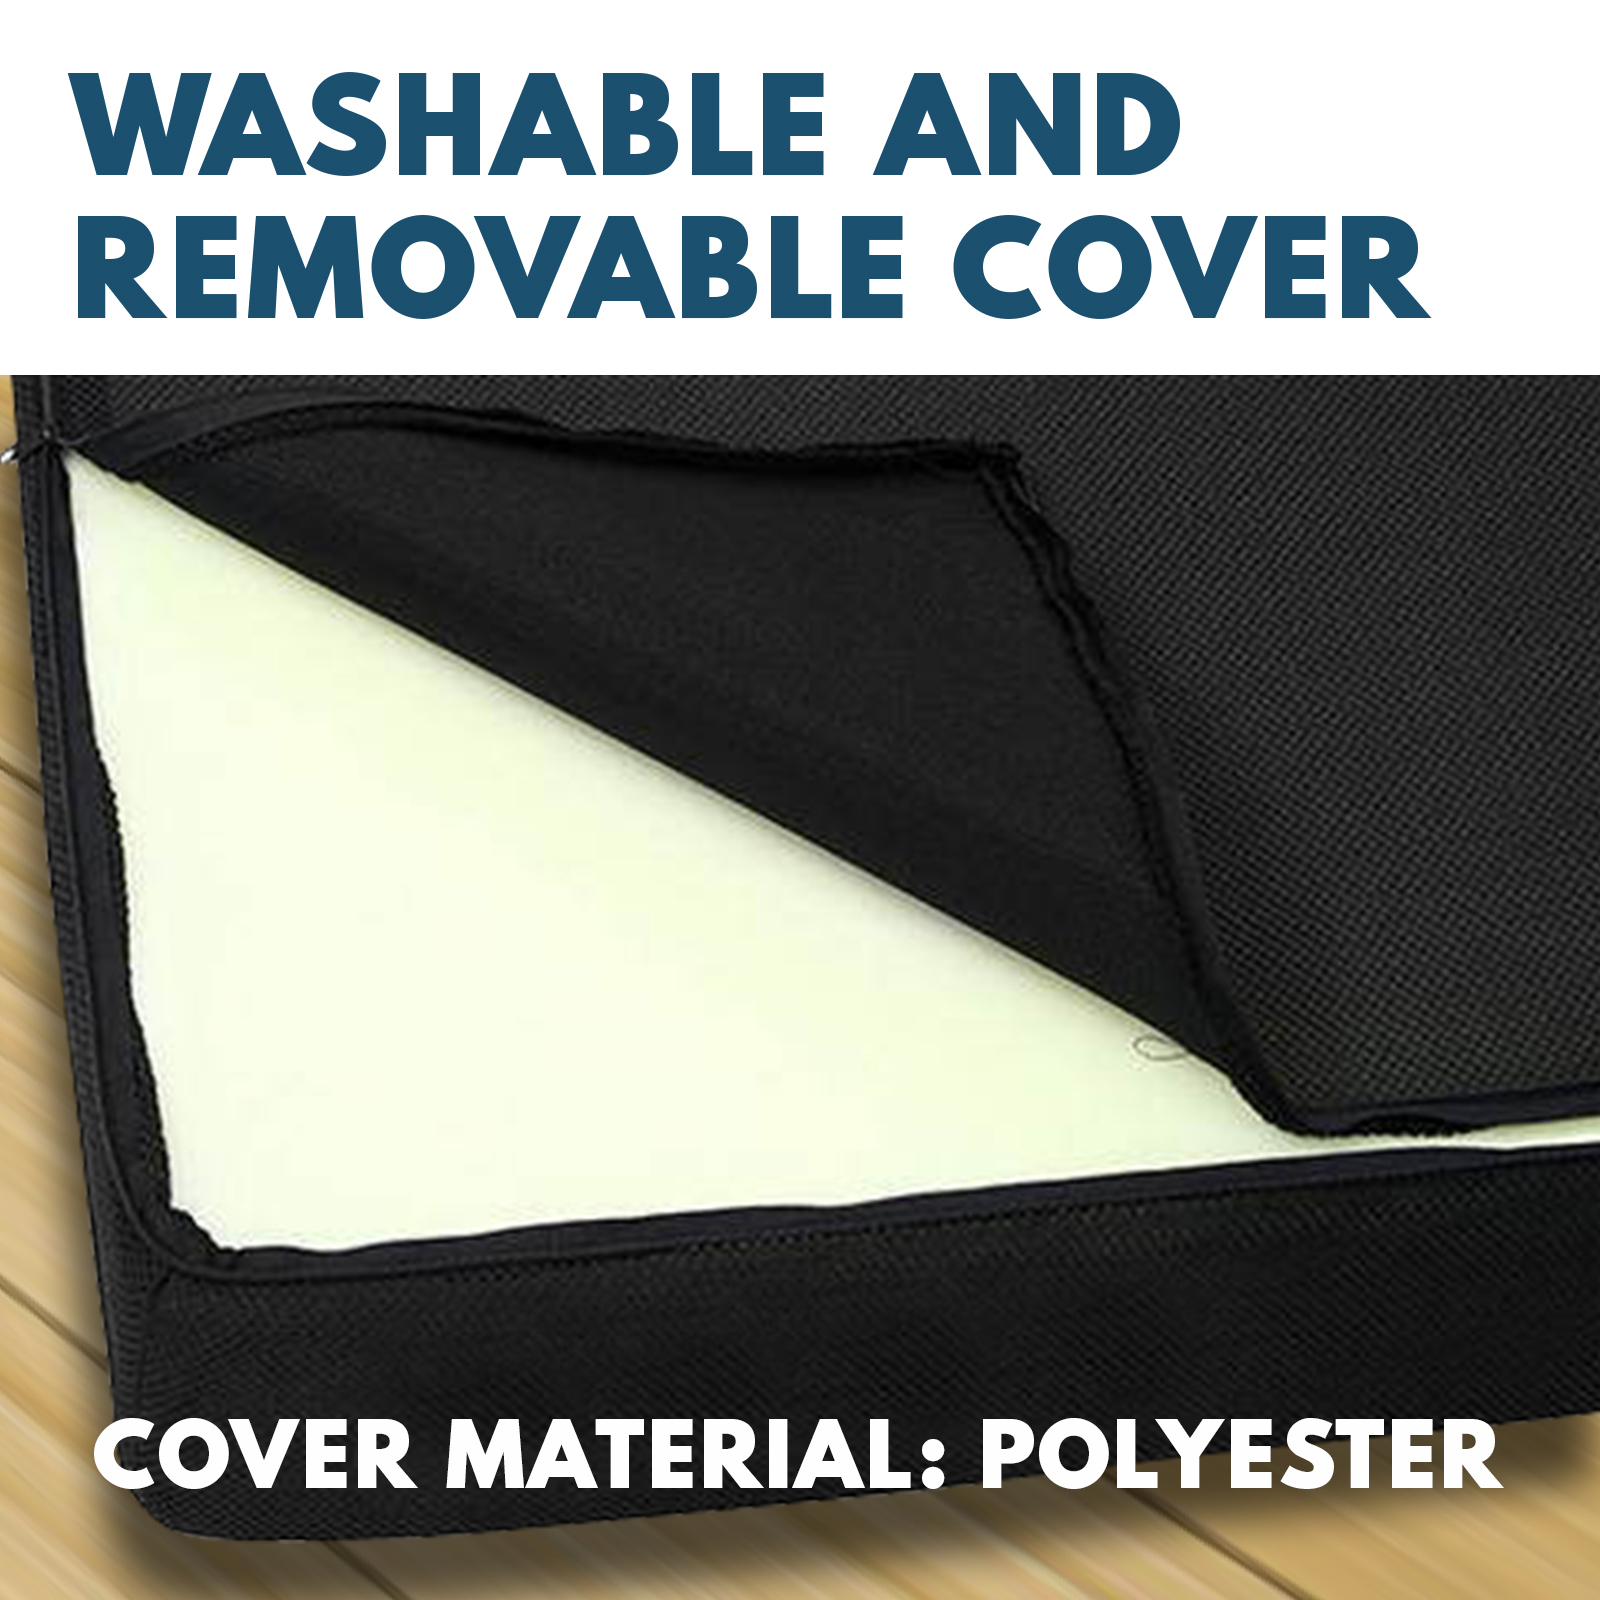 Folding Foam Bed Mattress Portable Double Sofa Bed Mat Air Mesh Fabric - Black